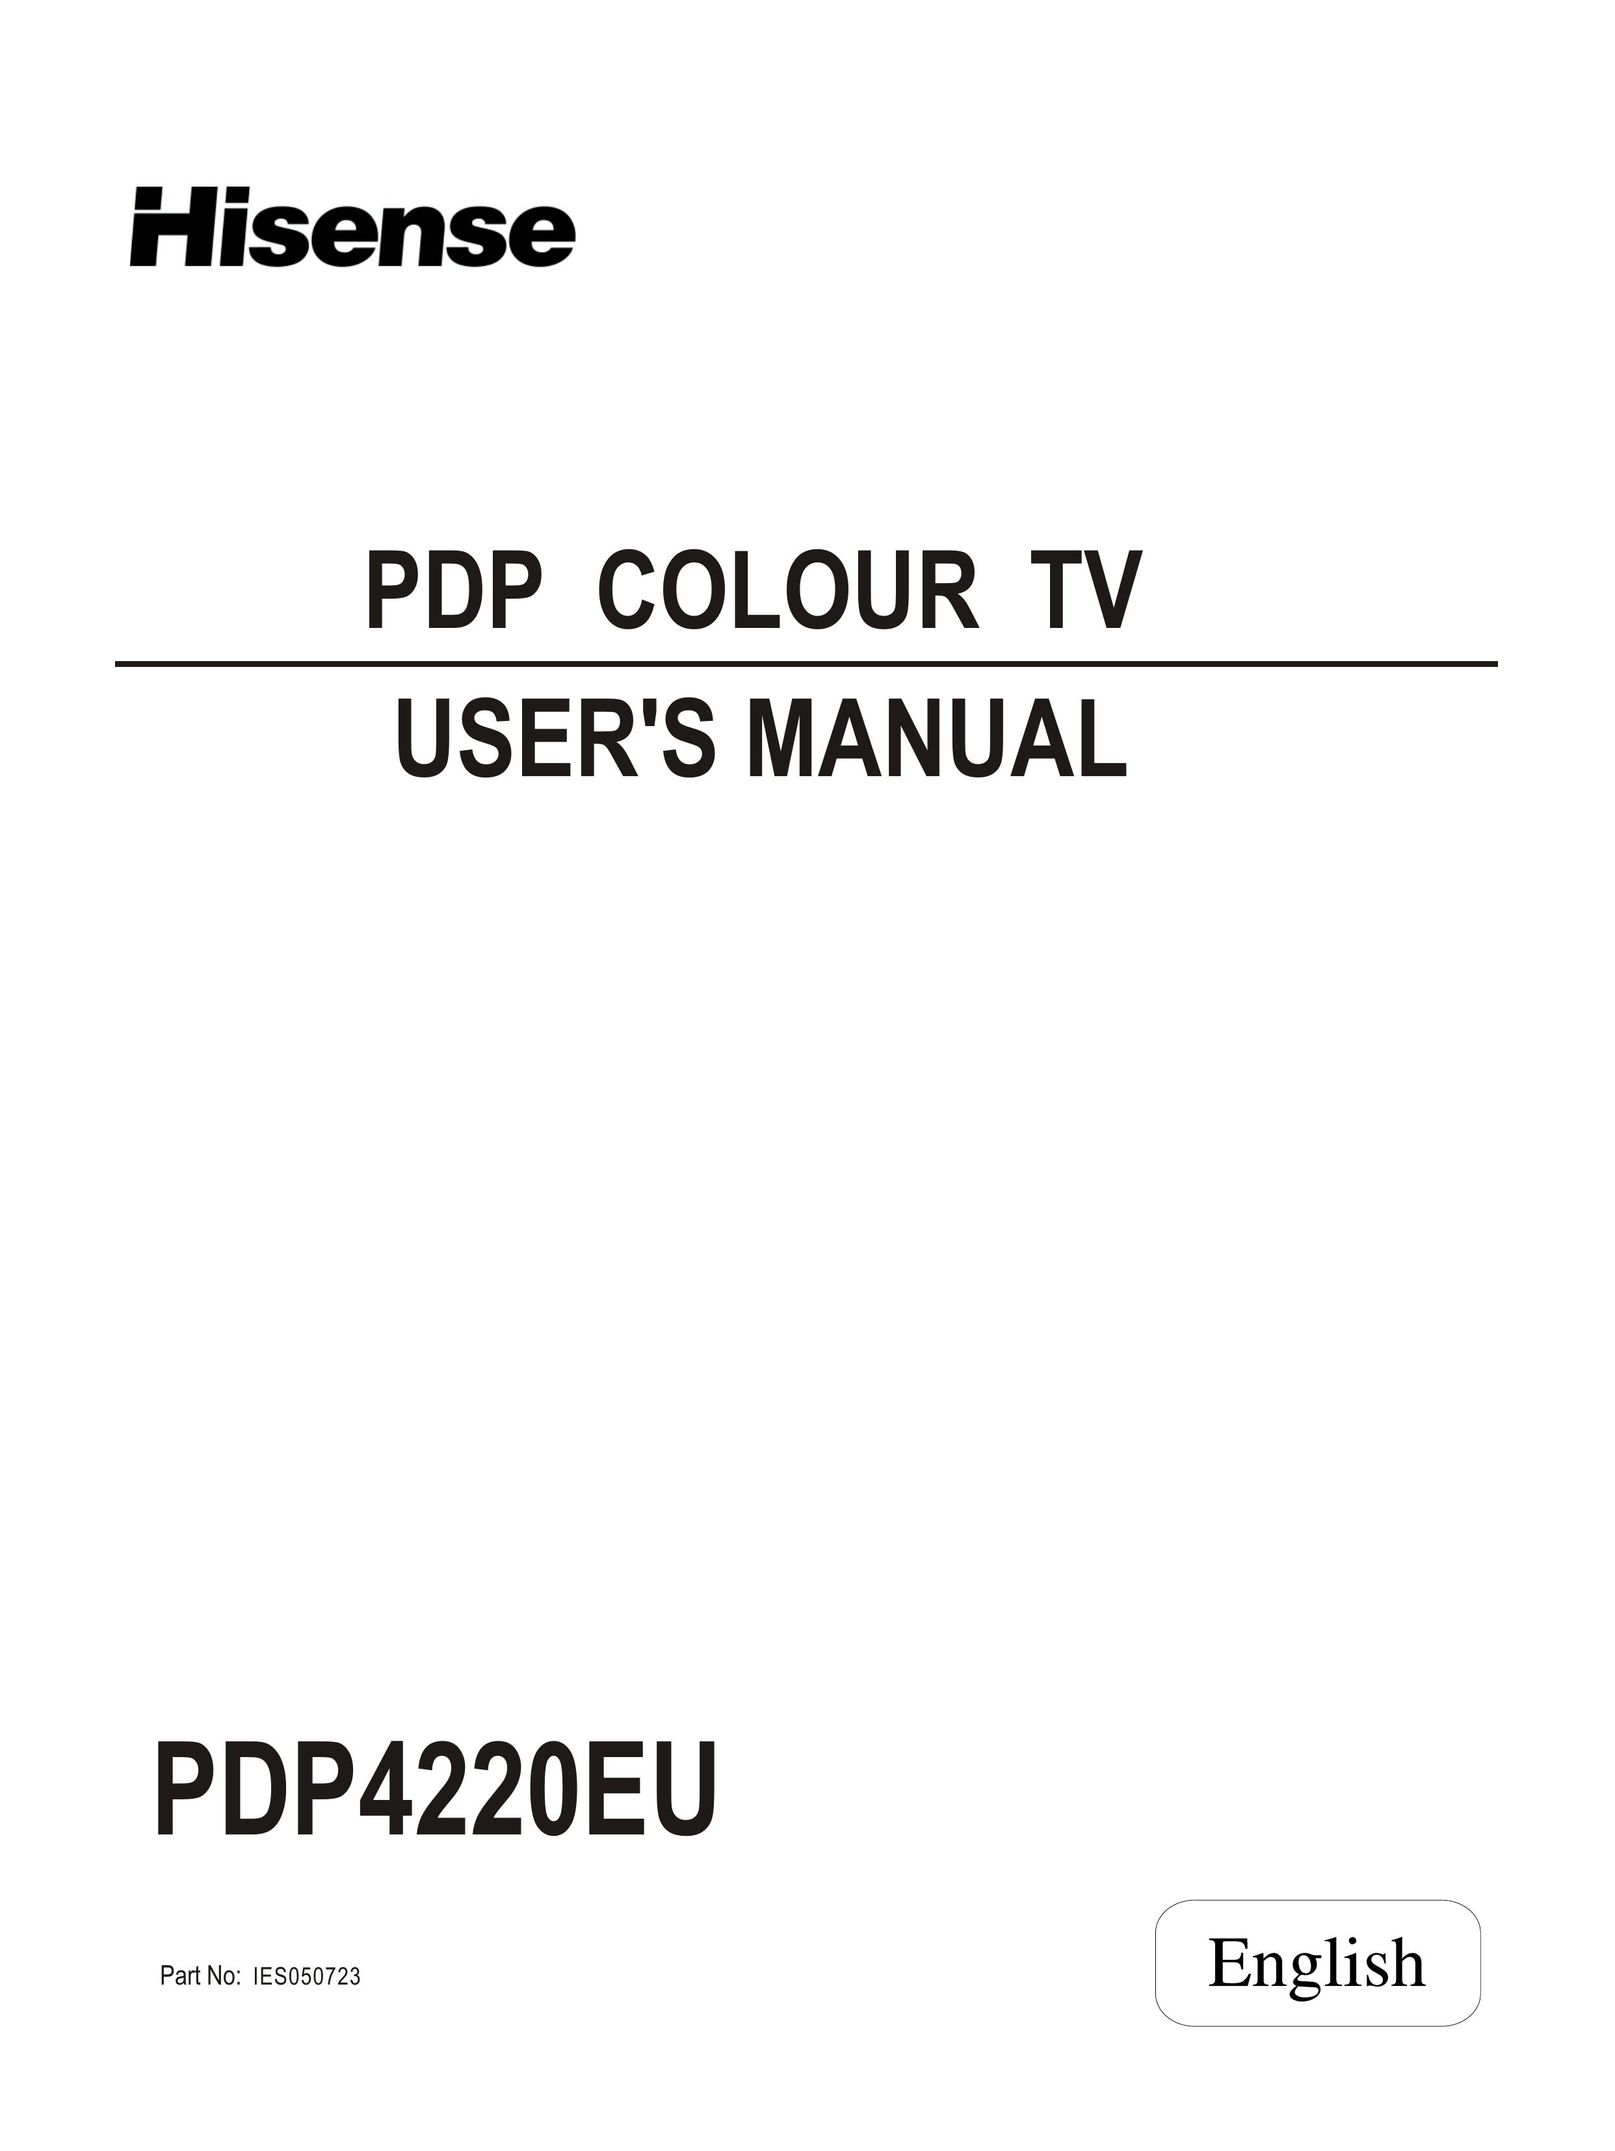 Hisense Group PDP4220EU CRT Television User Manual